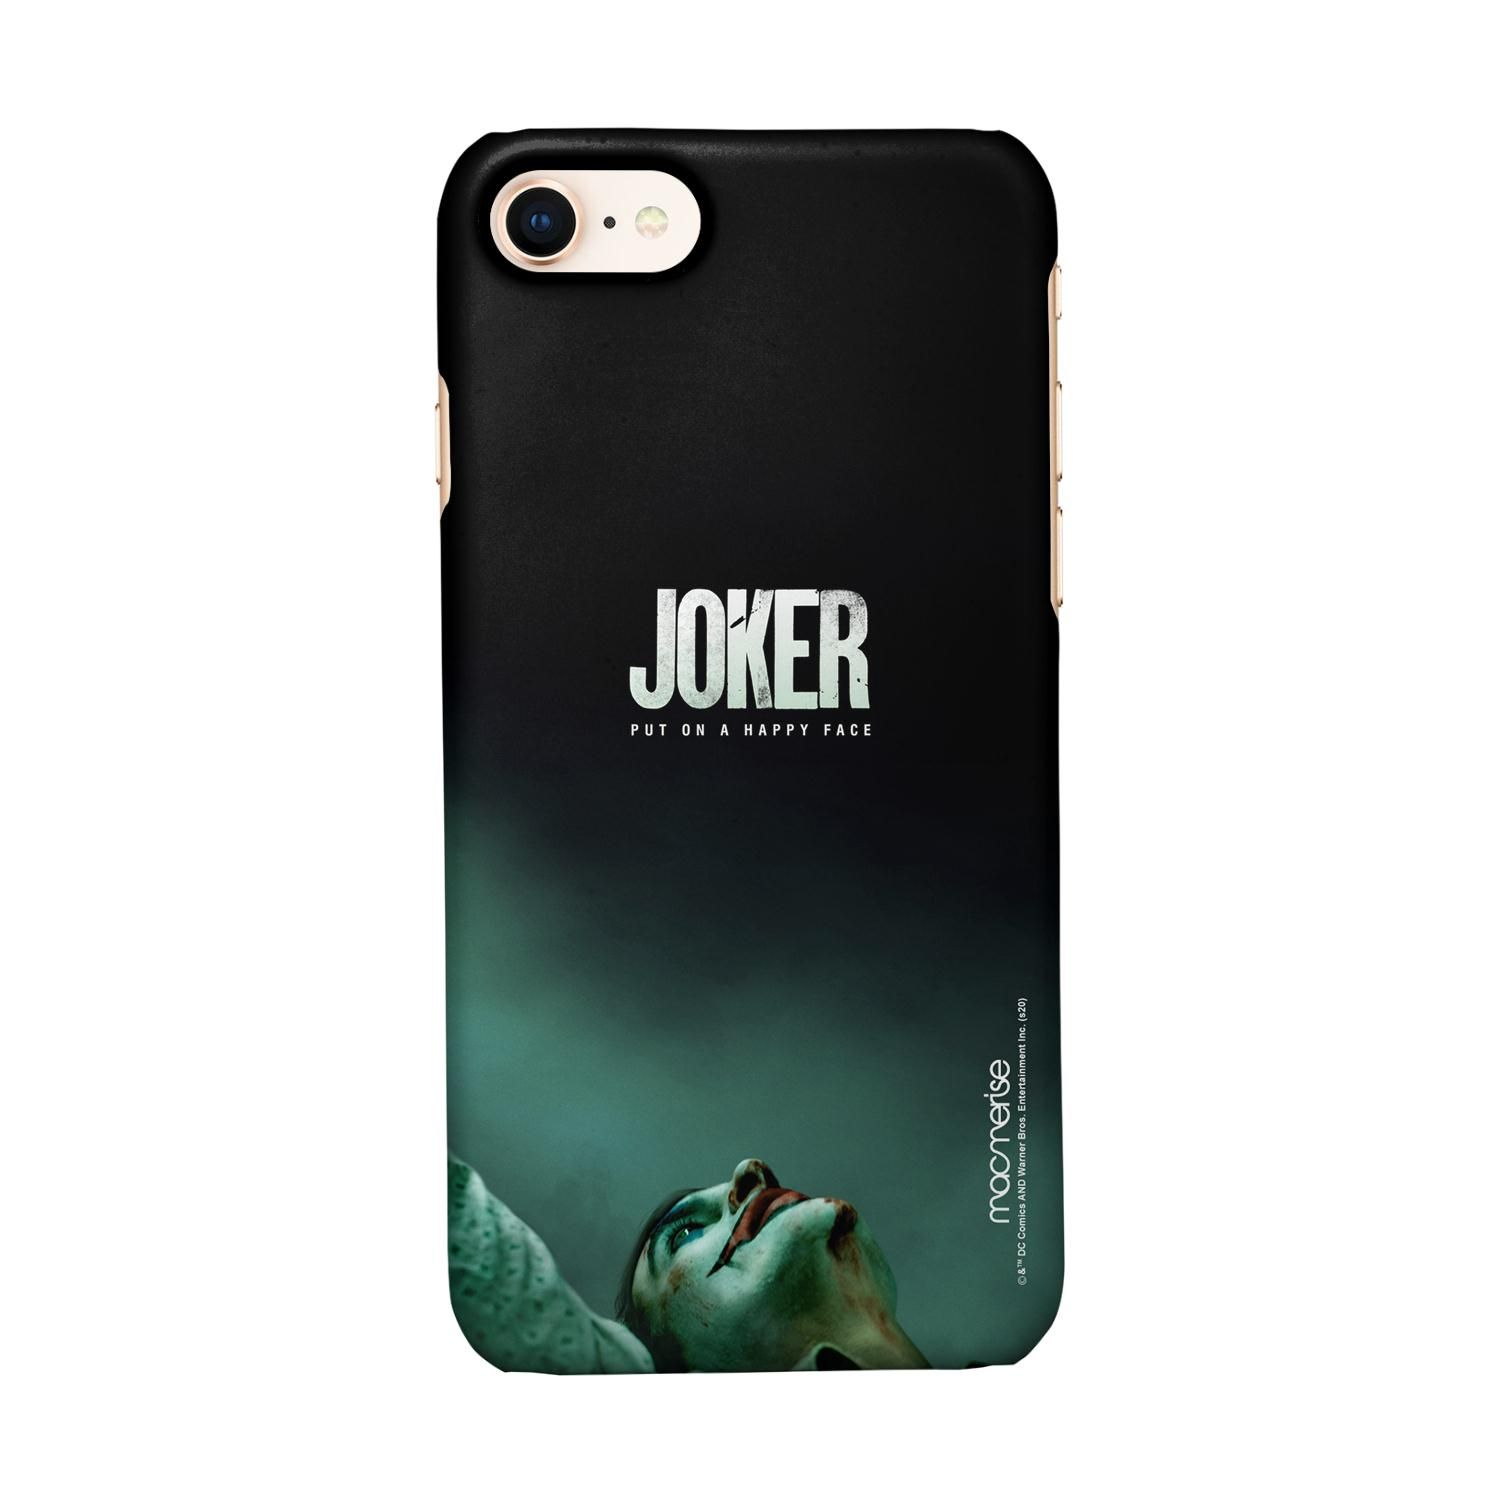 Buy Rise of the Joker - Sleek Phone Case for iPhone 7 Online